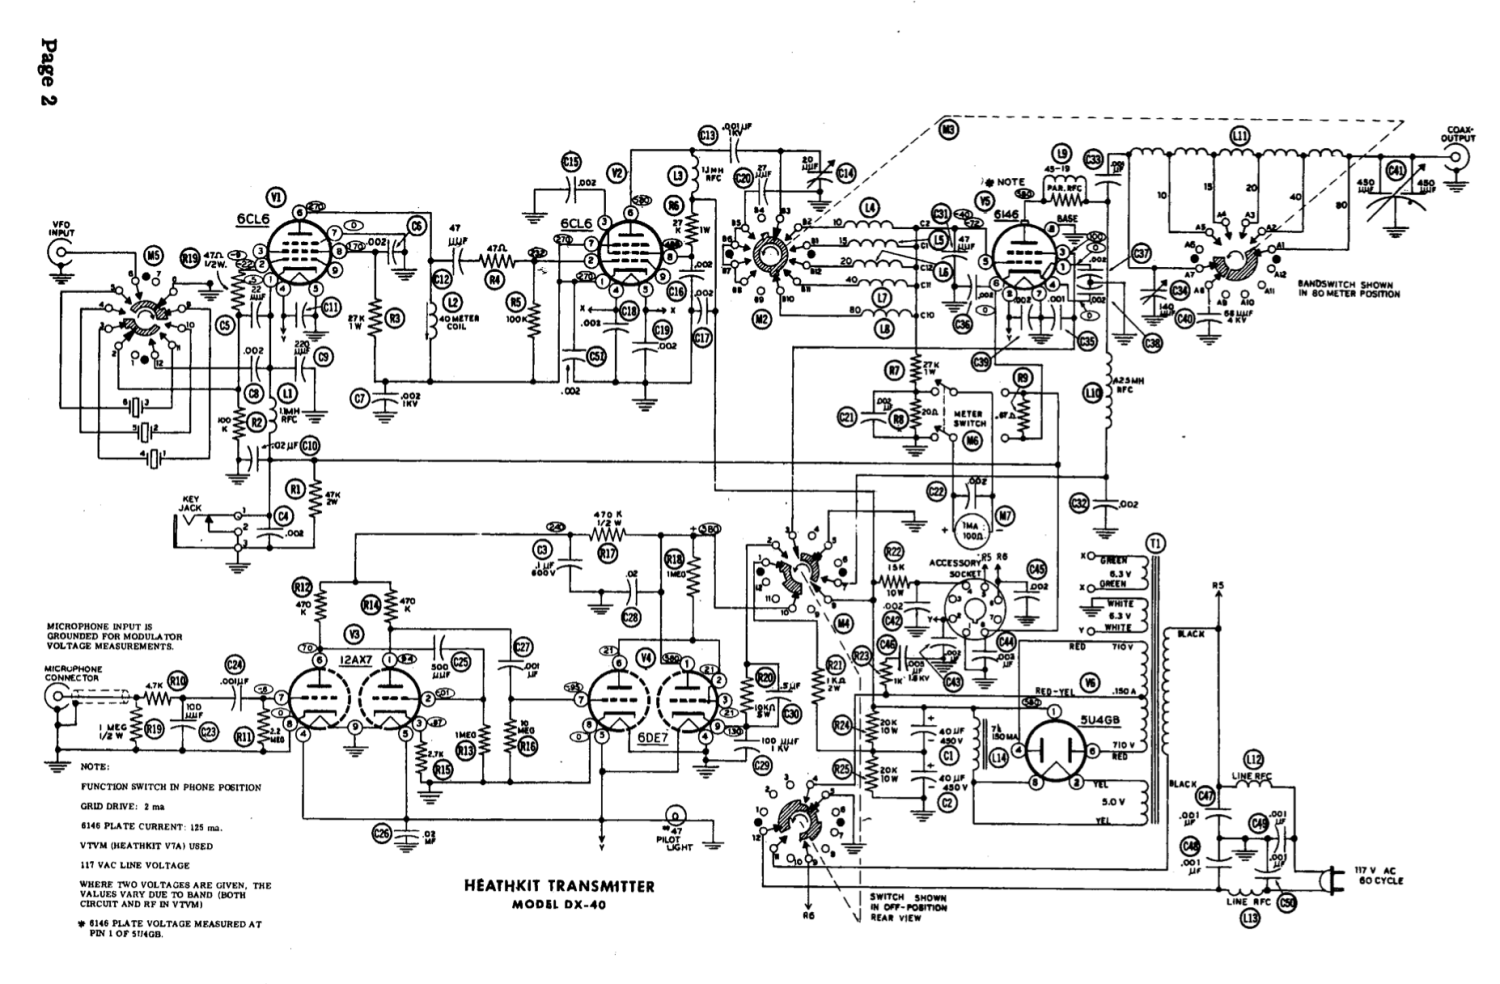 Heathkit DX-40 Amateur Transmitter - Assembly Manual 1